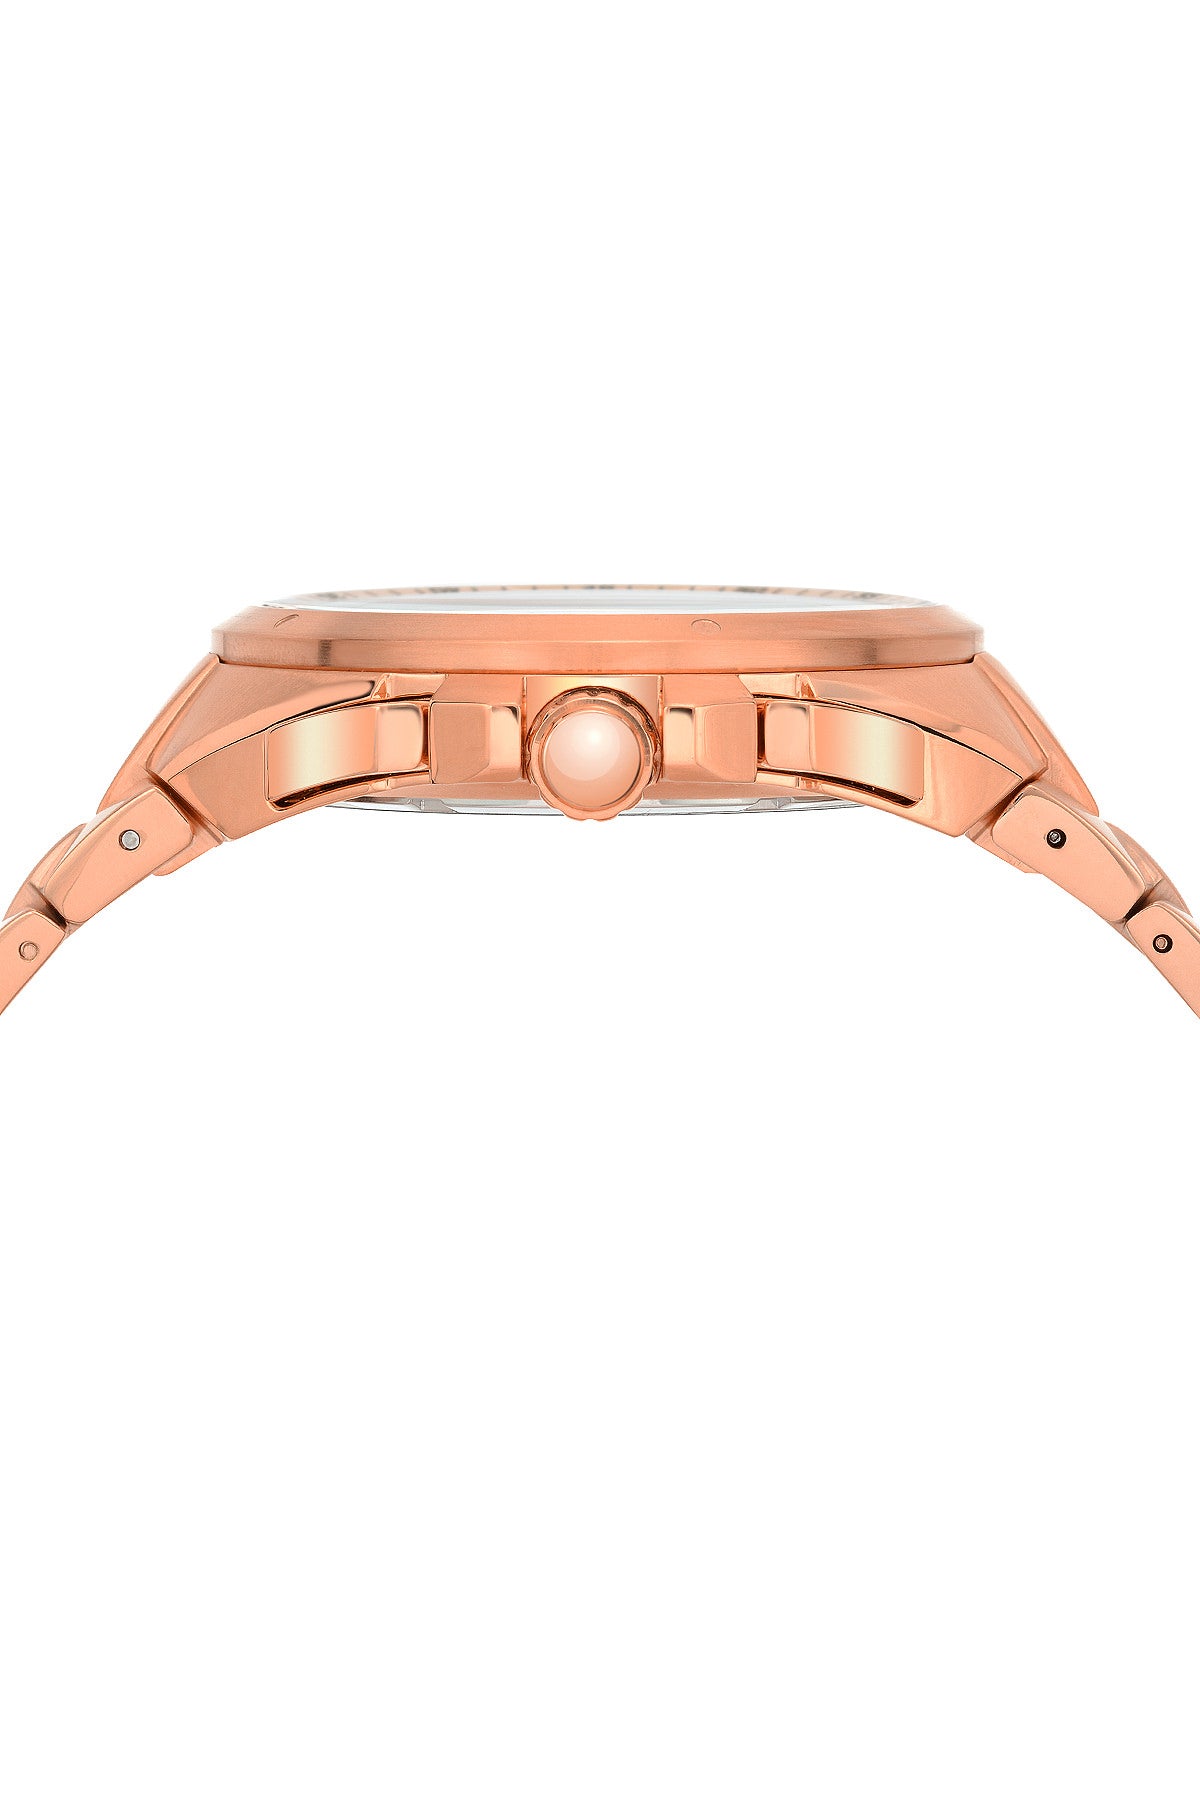 Porsamo Bleu Damien luxury chronograph men's stainless steel watch, rose 311CDAS